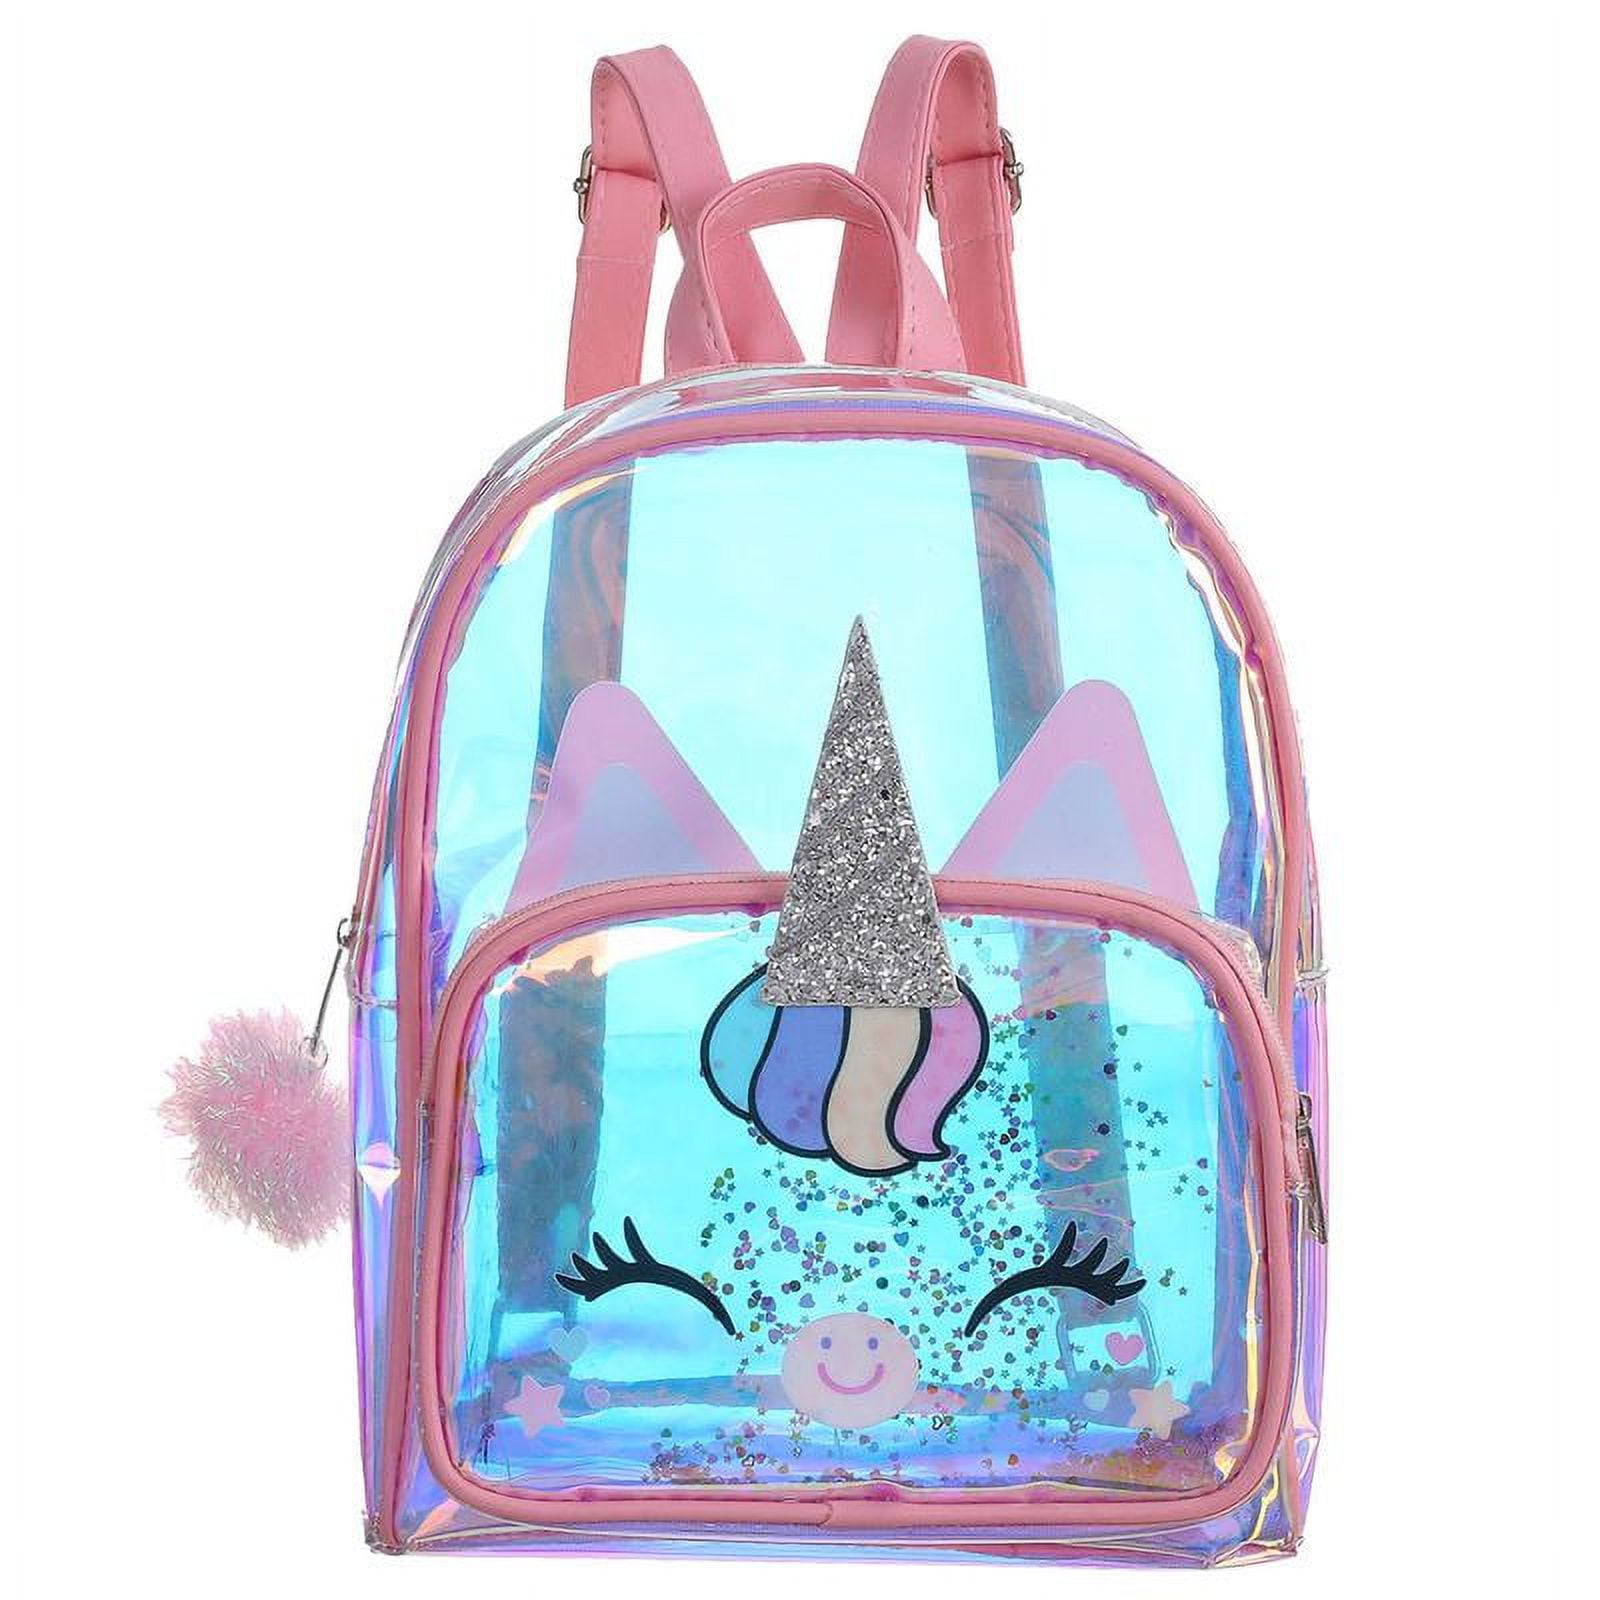 Teblacker Clear Unicorn Girl Backpack Purse See through Casual Daypack Satchel Travel Shoulder Bag Pink e7129acb e028 4f4c 8460 aea47216e72d.c074e3ff3a4316c57f2e8e76505af8e9